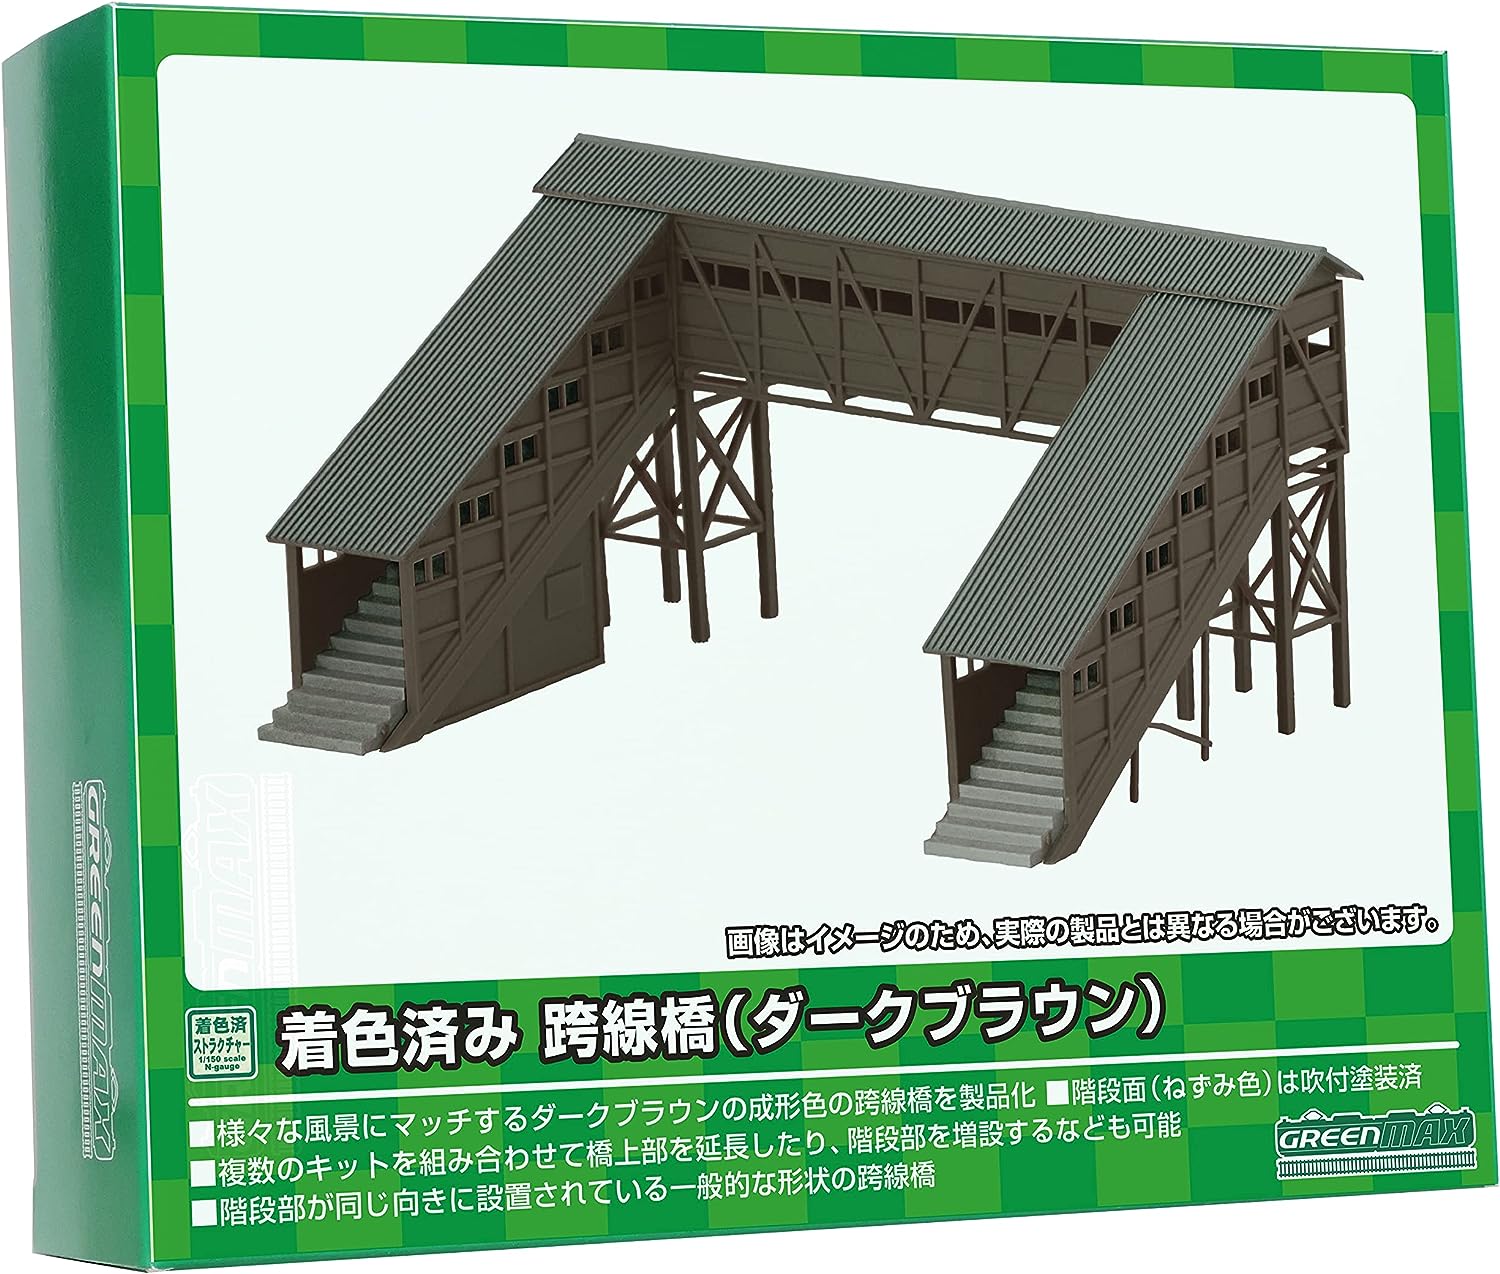 Greenmax 2627 N Gauge Interlock Bridge Dark Brown Pre-Colored Assembly Kit Railway Model Structure - BanzaiHobby